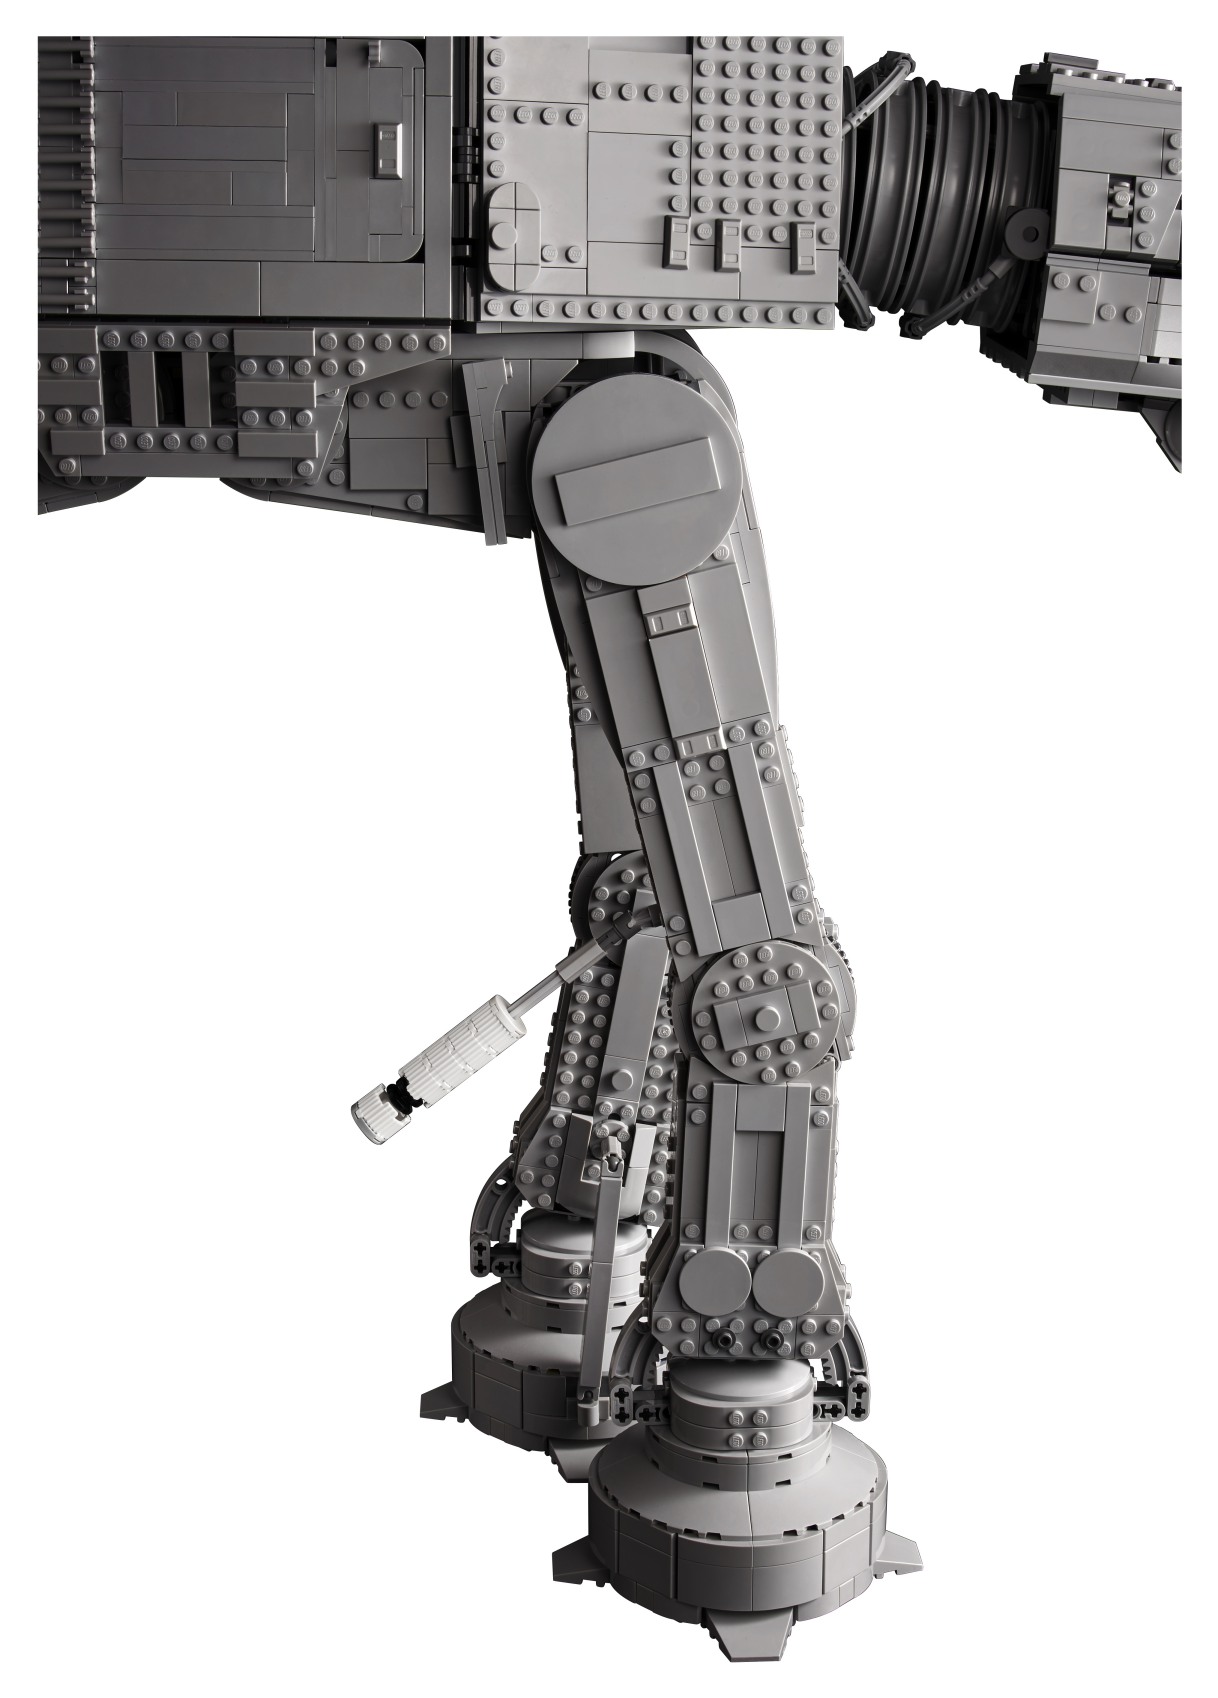 Bricks in Bits LEGO review revision set nuevo AT-AT Star Wars Hoth lanzamiento Luke Skywalker General Veers